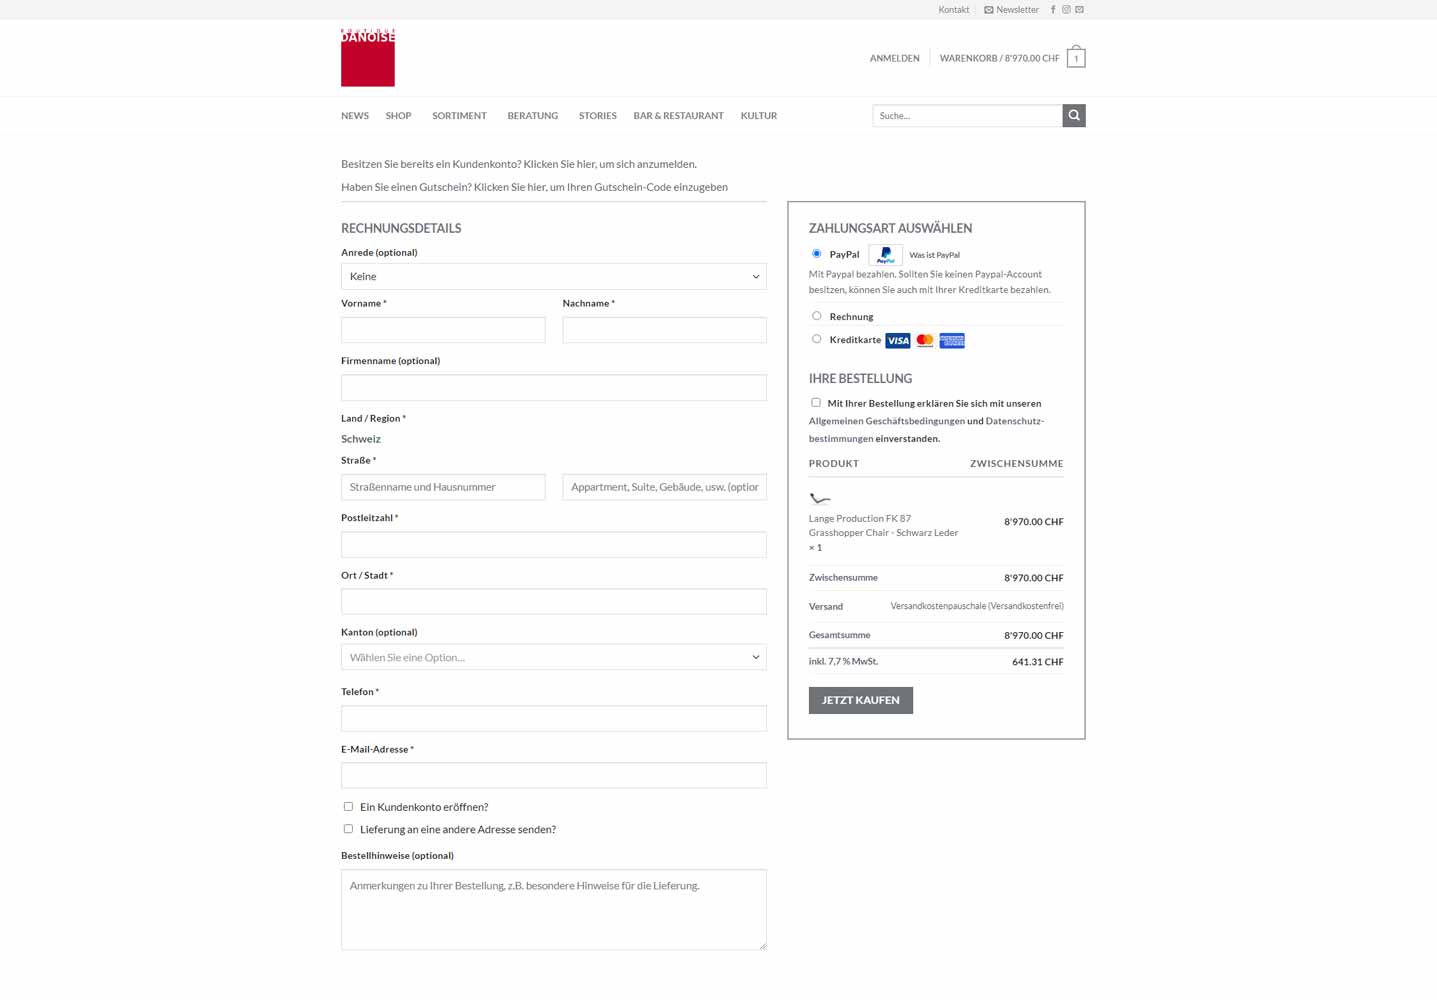 Onlineshop Realisierung Webshop E-Commerce erstellen lassen ShowMyProject Digital Agentur Basel Schweiz Homepage mit Onlineshop Webdesign 2022 Boutique Danoise AG Basel